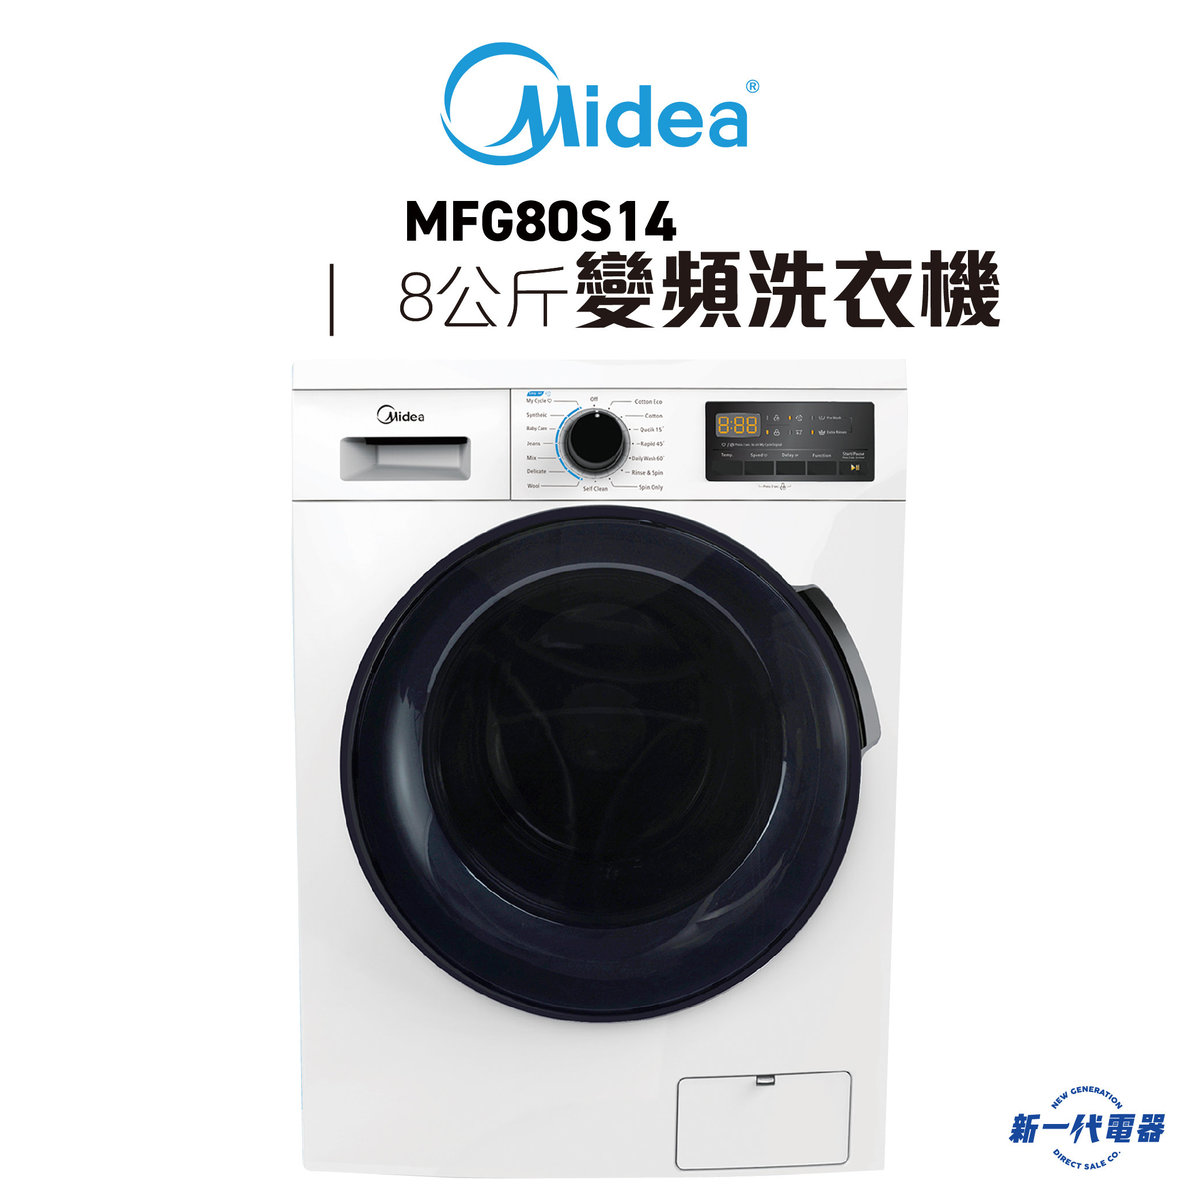 MFG80S14 -8KG 1400轉 超薄型 變頻摩打 前置式洗衣機 (MF-G80S14)